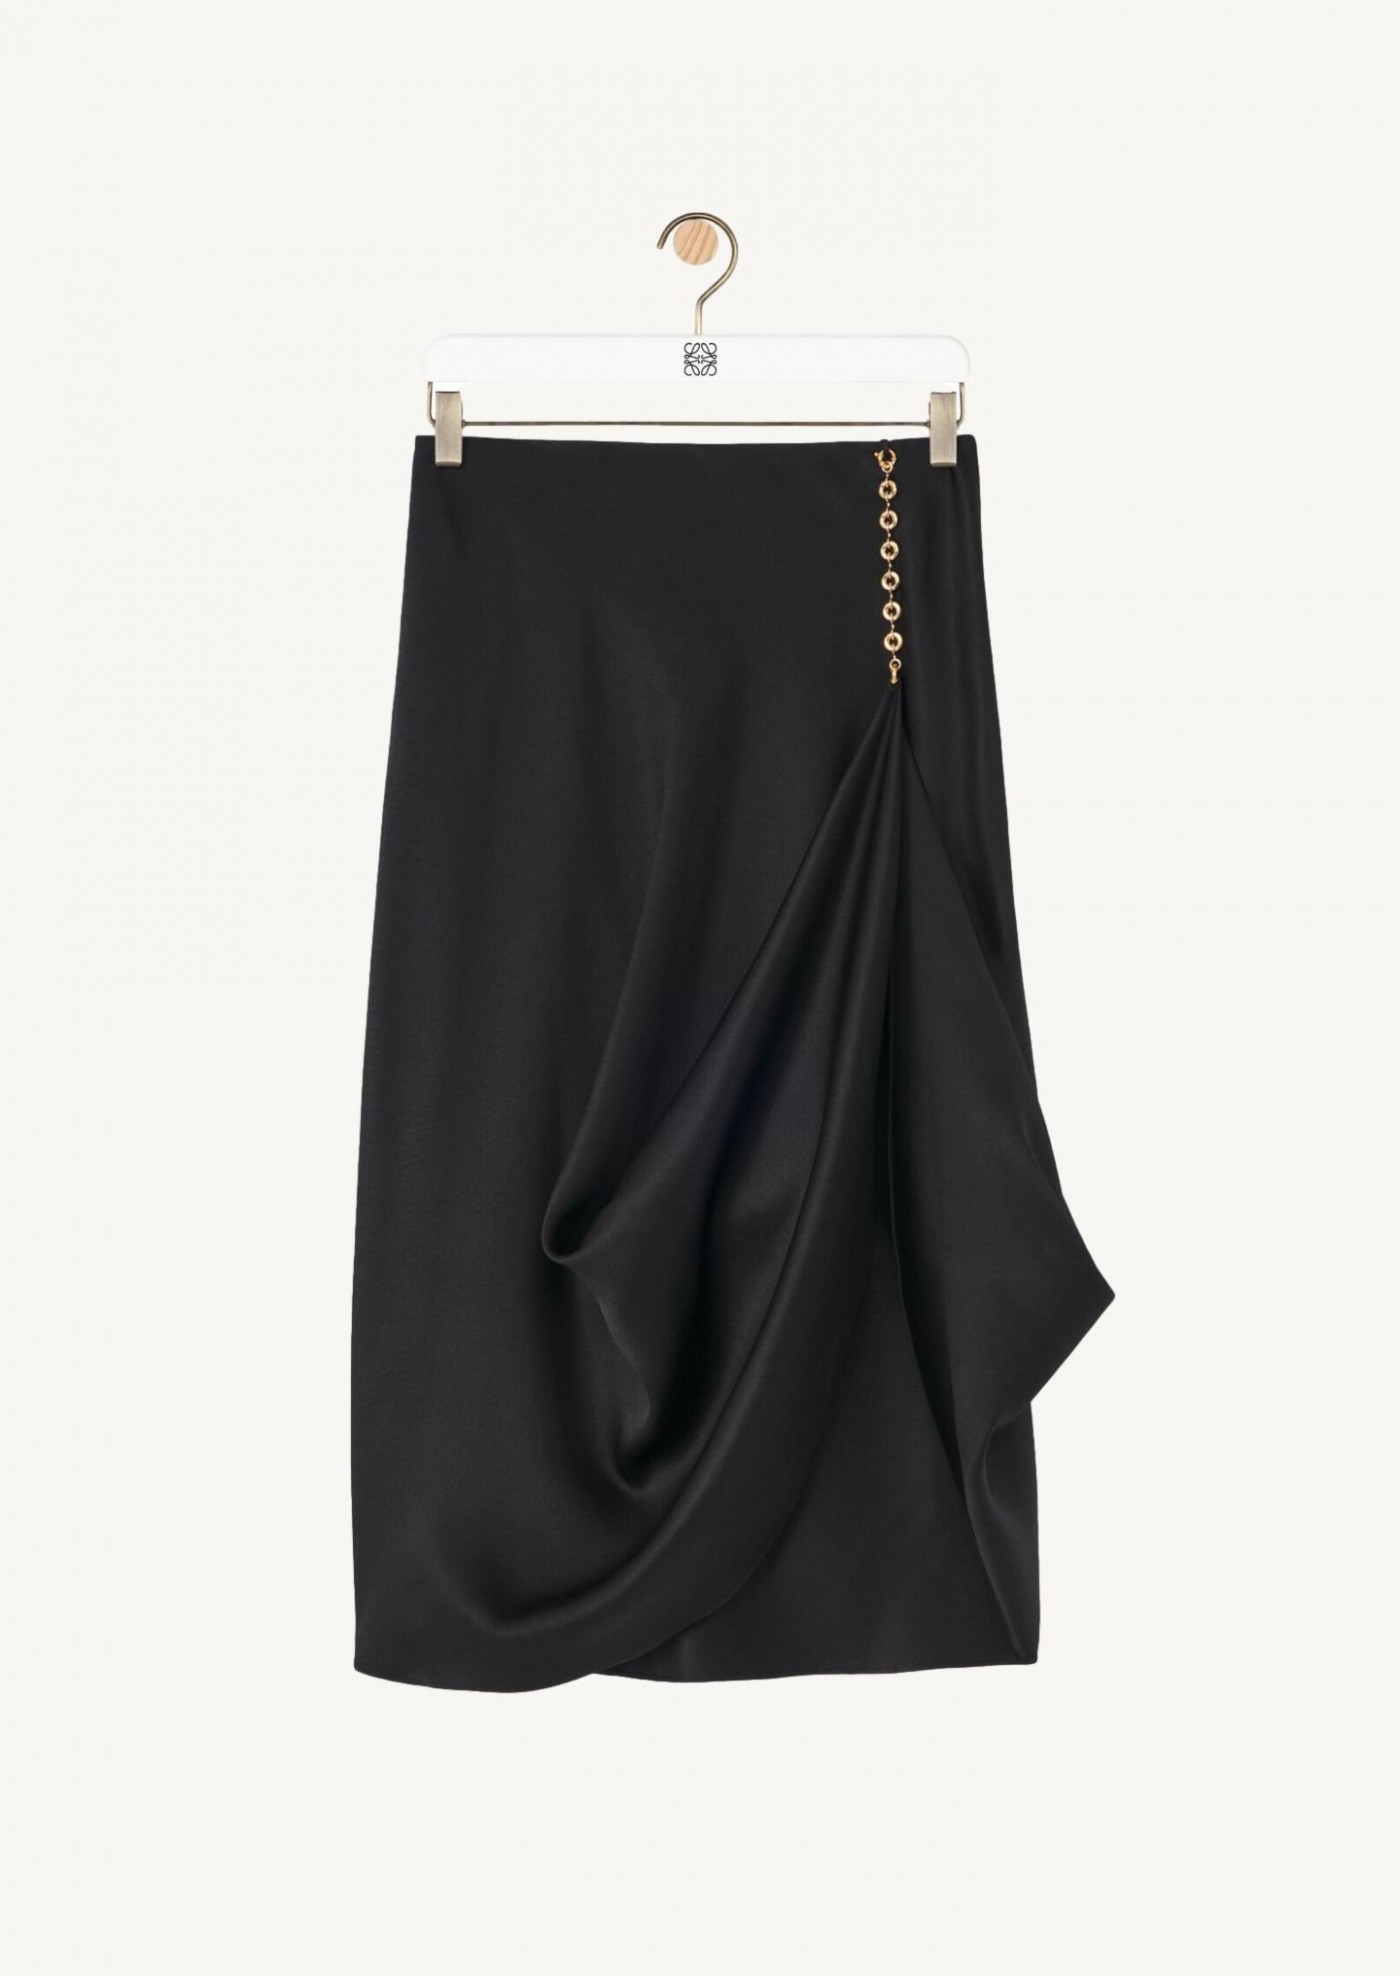 Chain skirt in silk